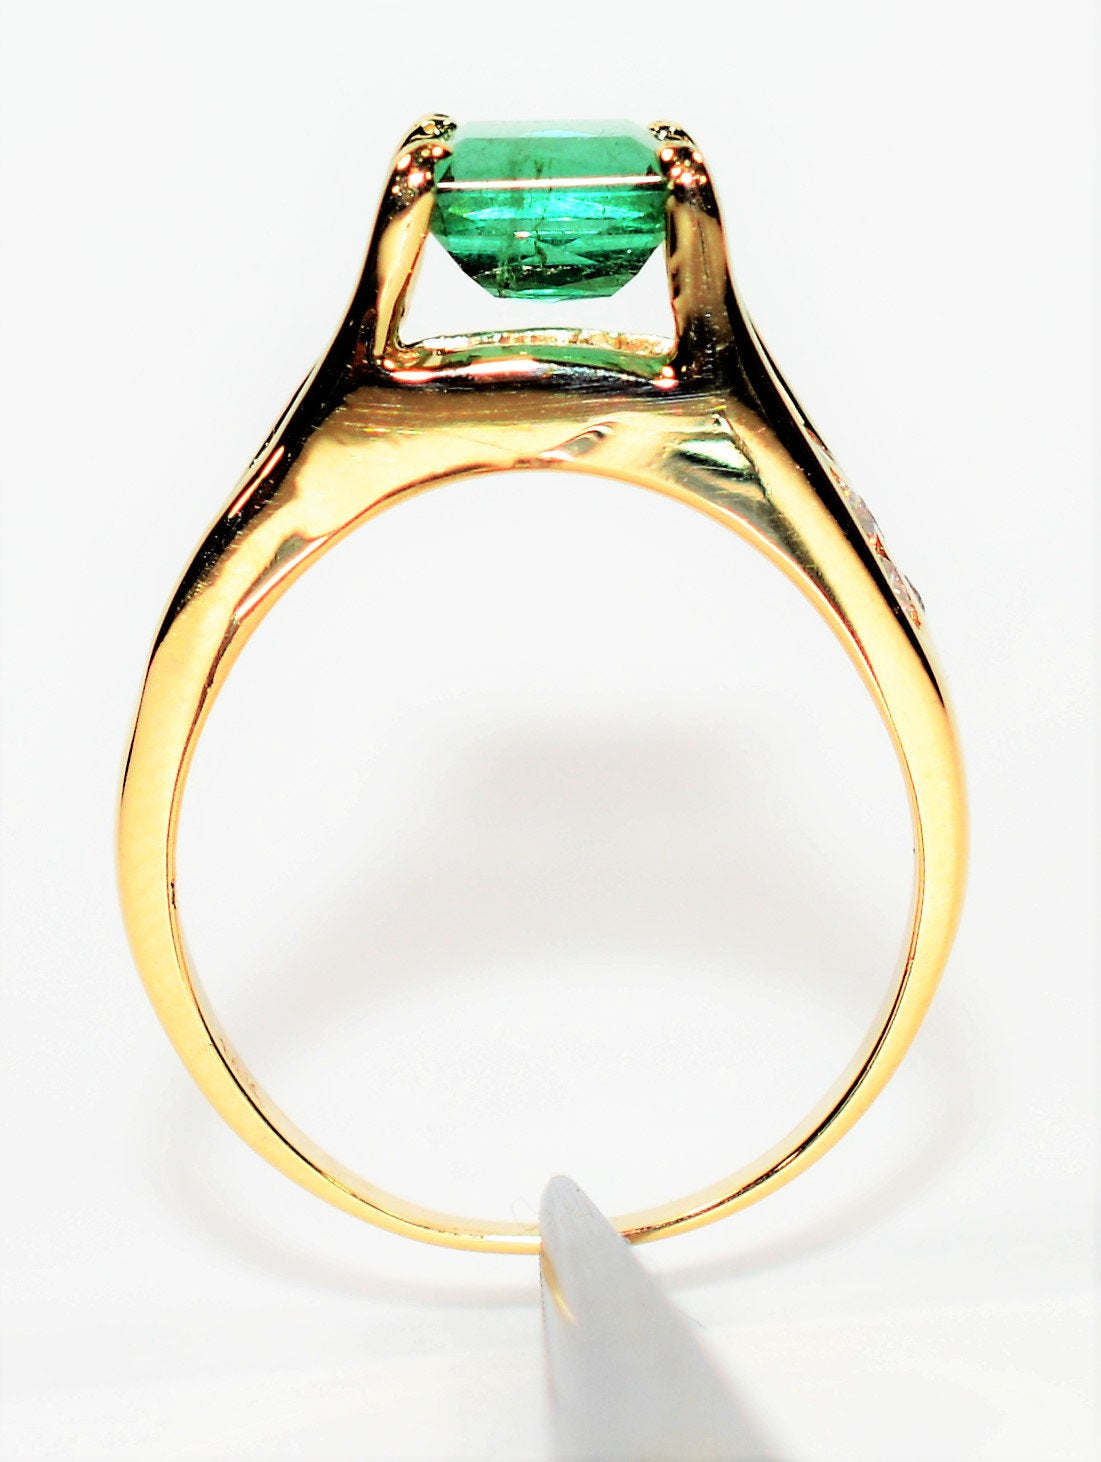 Certified Natural Paraiba Tourmaline & Diamond Ring 14K solid Gold 1.91tcw Cocktail Statement Women's Estate Jewelry